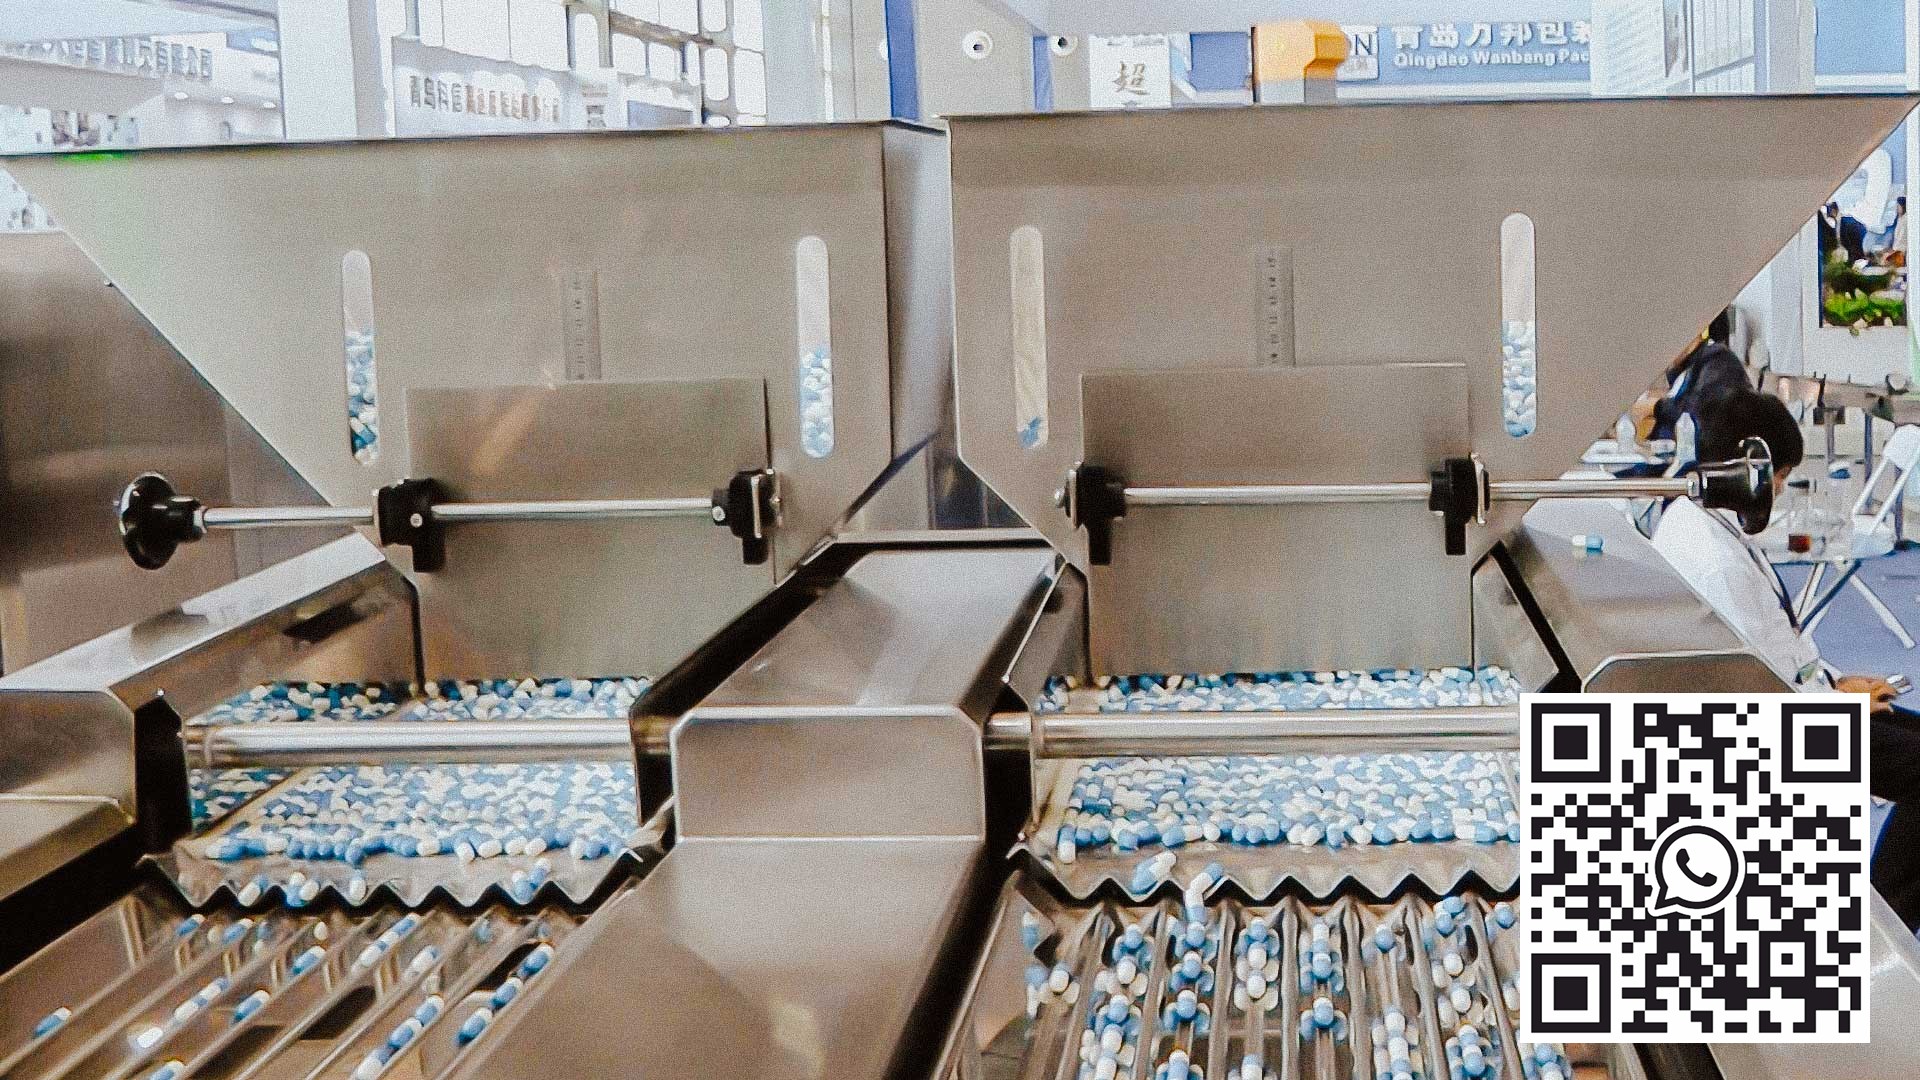 Garis pengepakan otomatis berkecepatan tinggi untuk mengemas kapsul gelatin ke dalam botol plastik